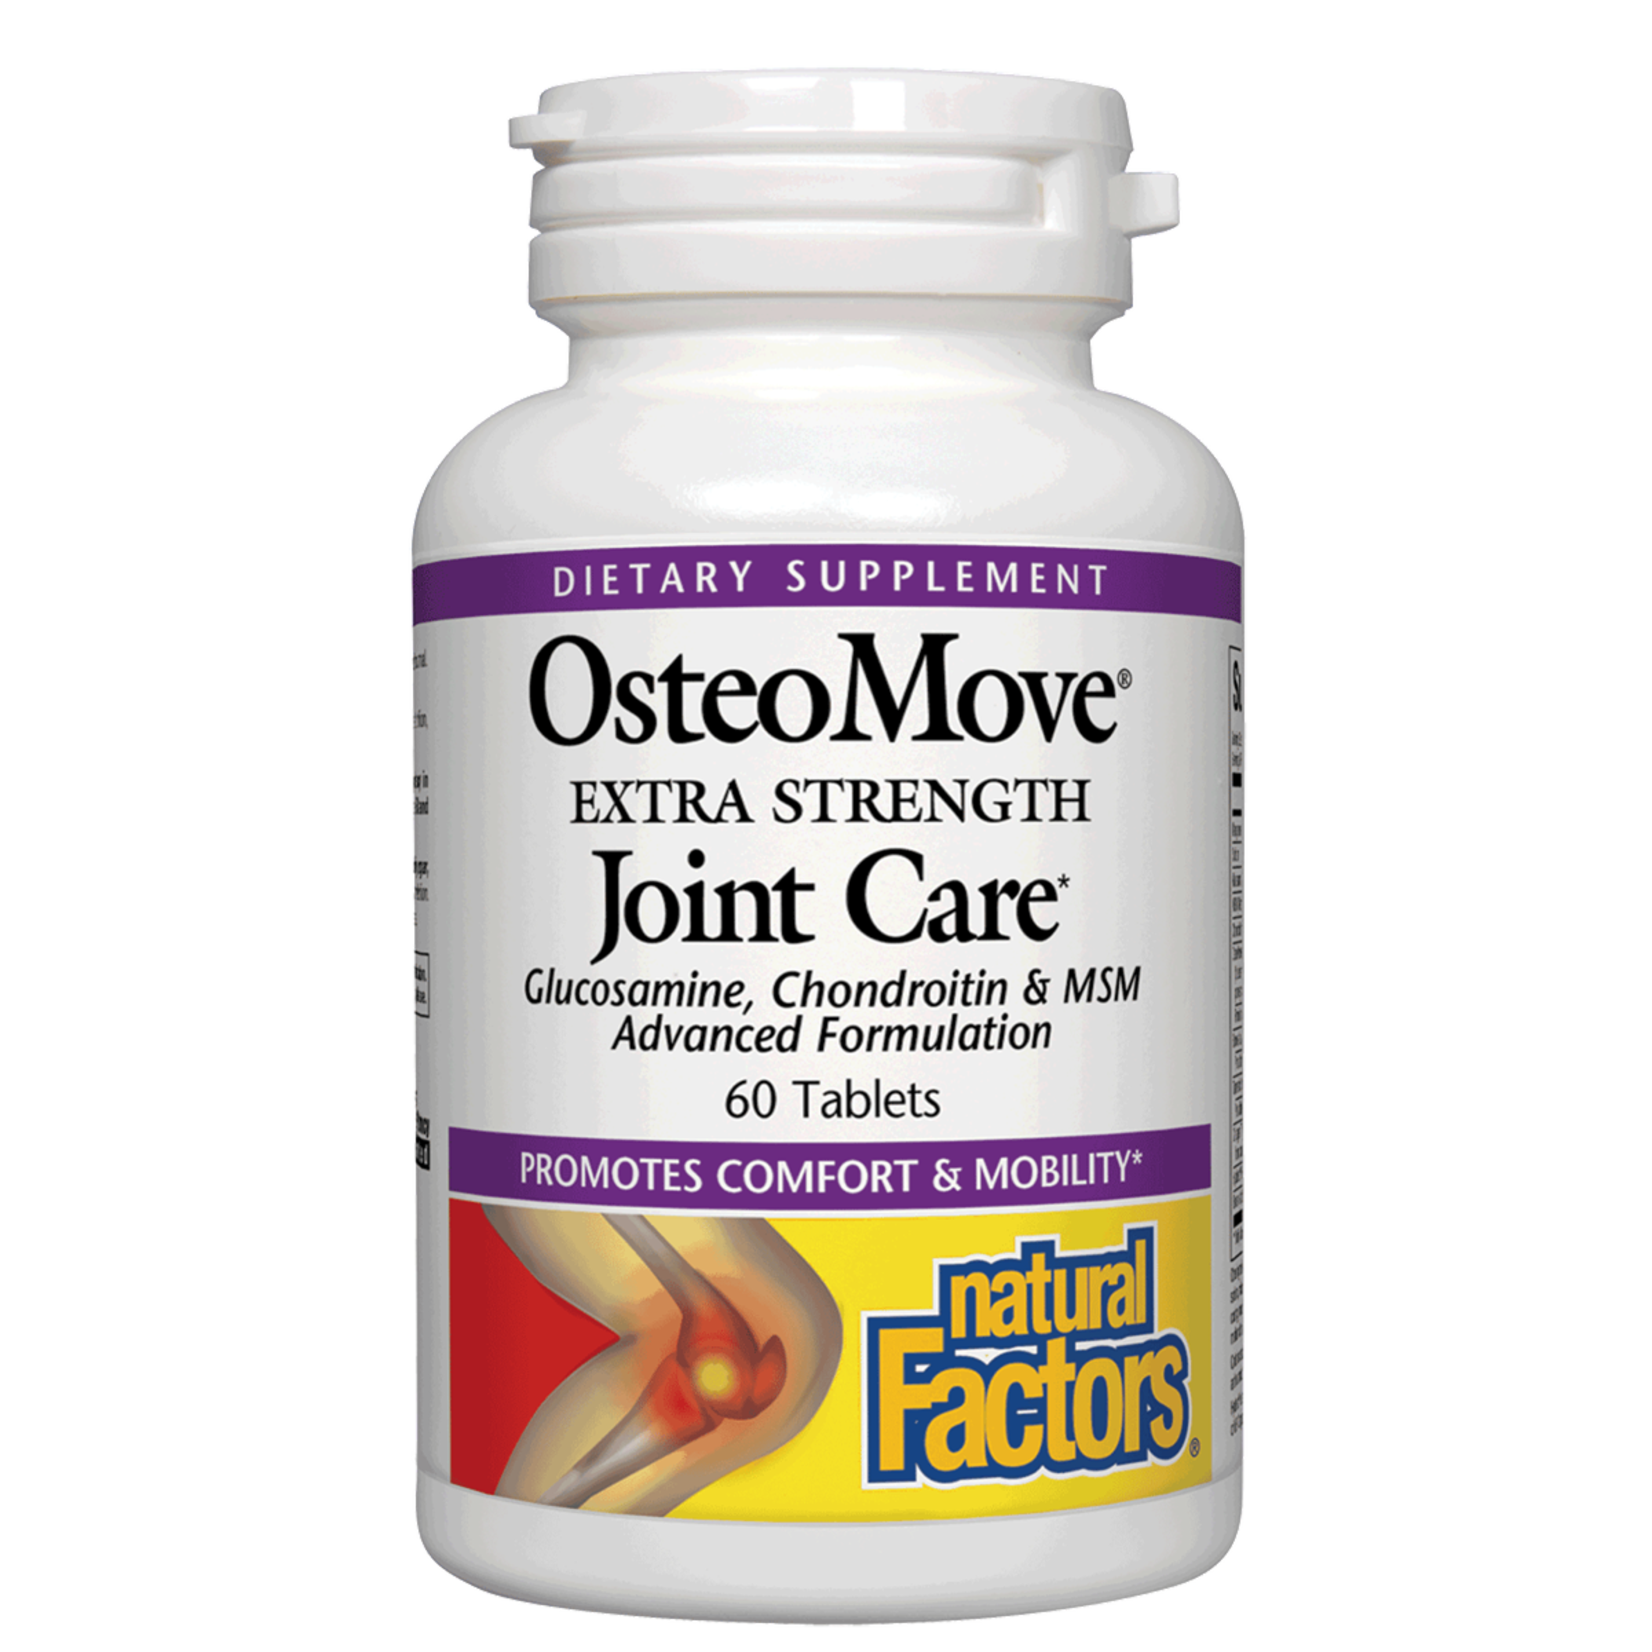 Natural Factors Natural Factors - Osteomove Joint Care - 60 Tablets